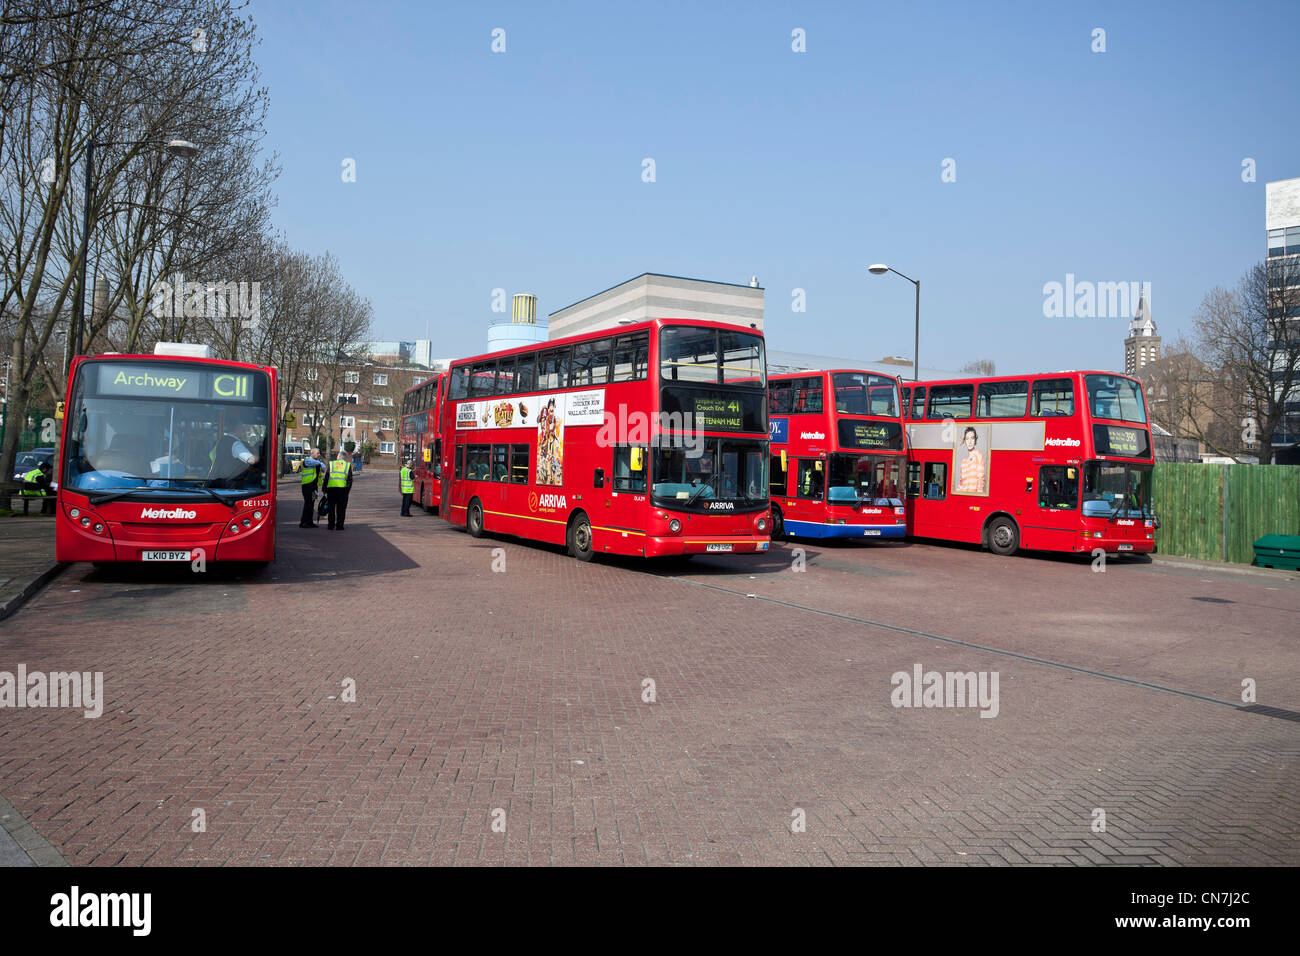 Bus terminus, Archway, London, England, UK Stock Photo